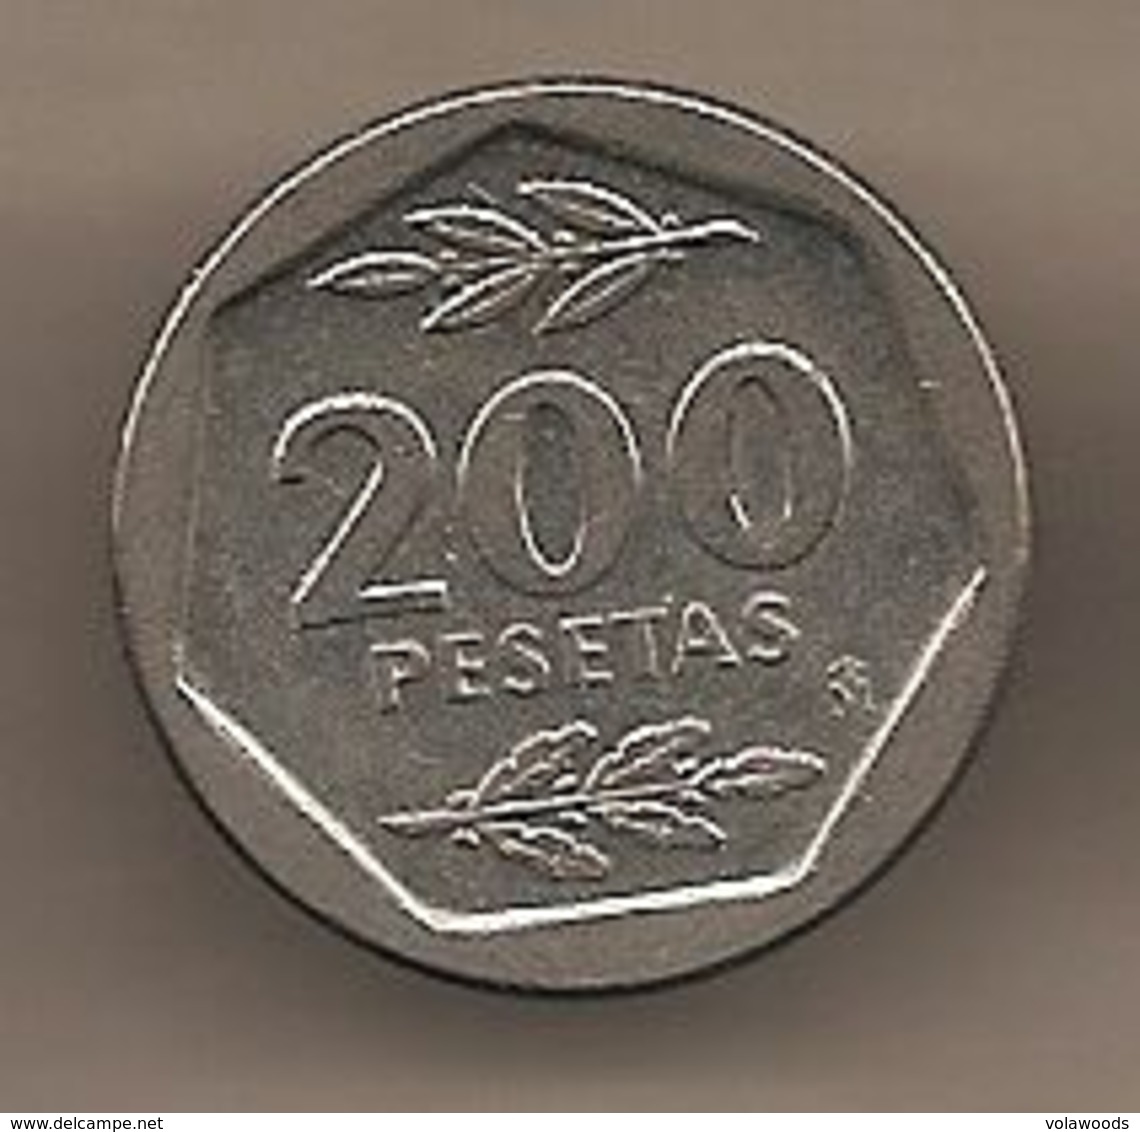 Spagna - Moneta Circolata Da 200 Pesetas  Km829 - 1988 - 200 Peseta